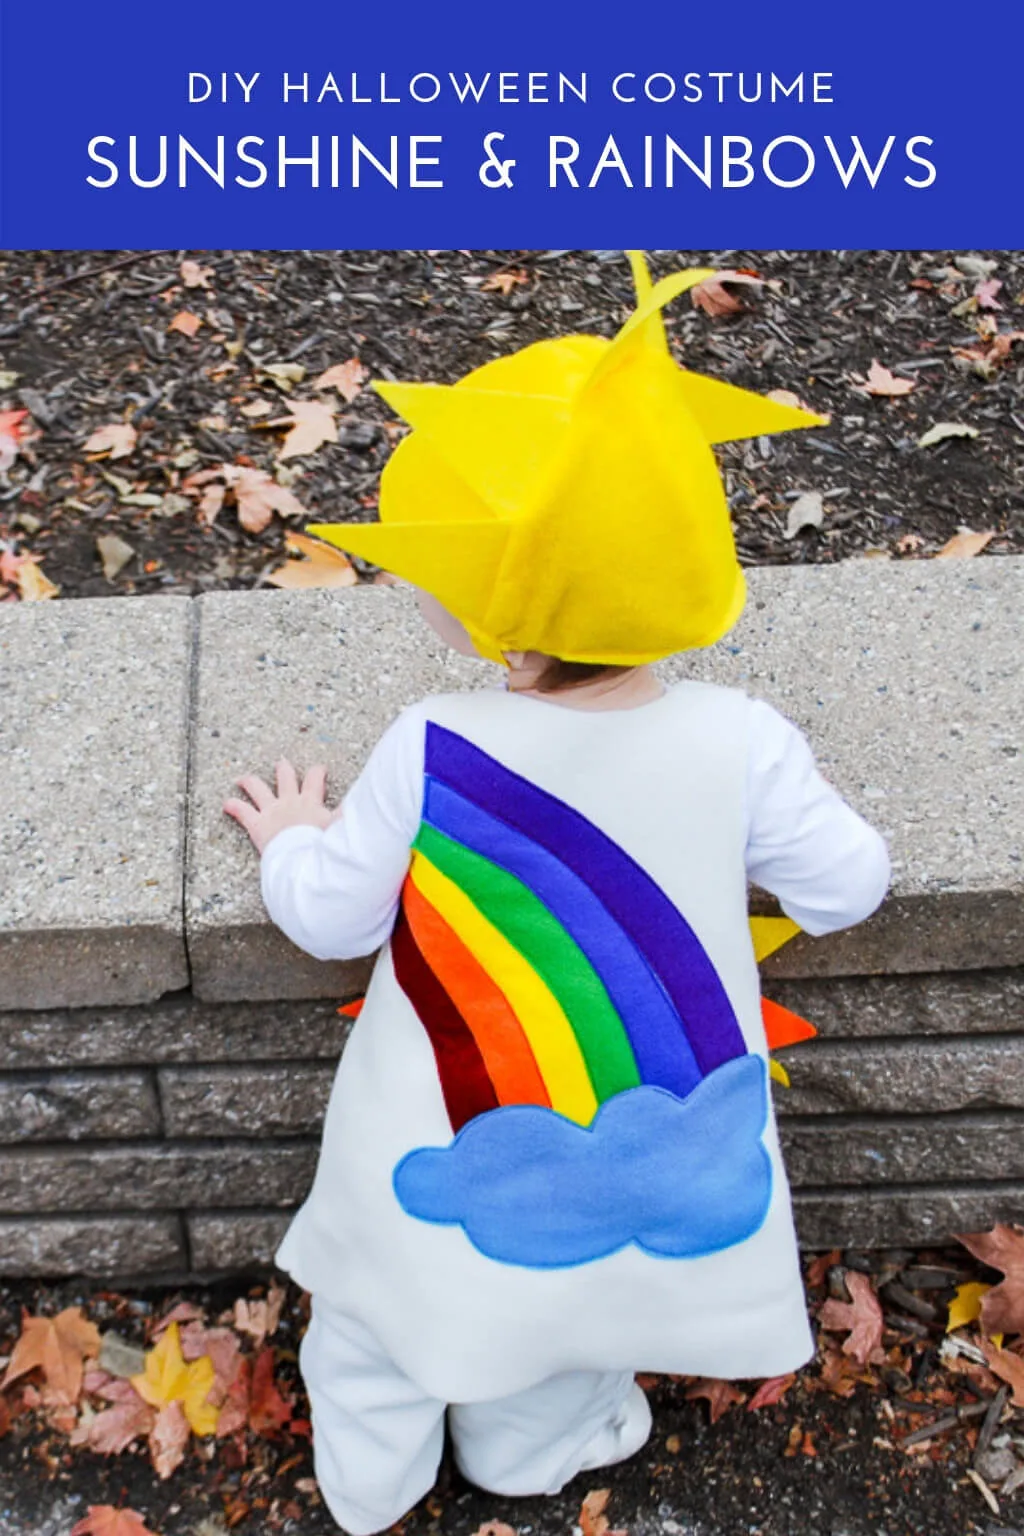 Sunshine and Rainbows DIY Halloween Costume for kids